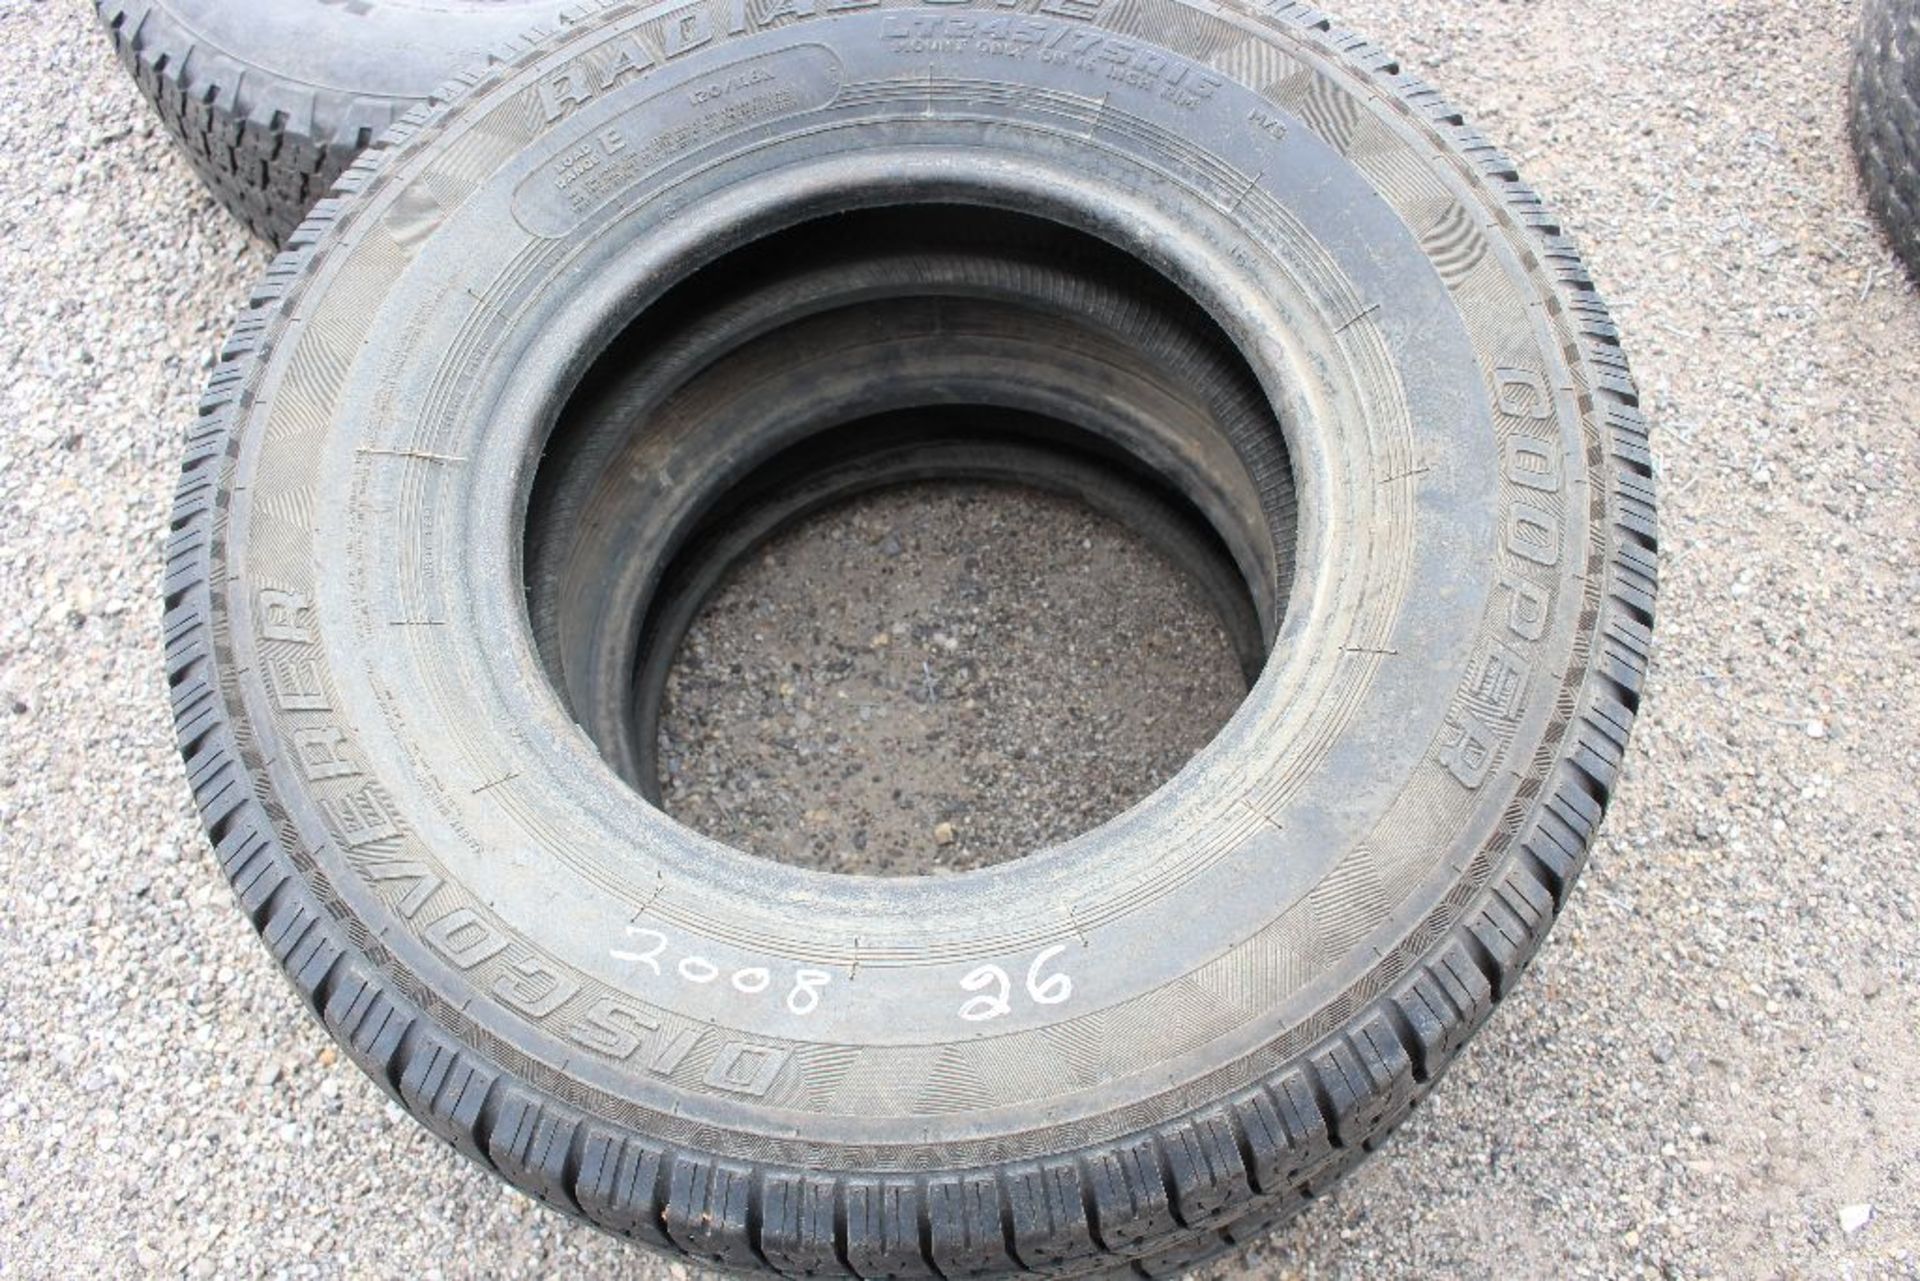 (2) Cooper Discoverer Radial 245/75 R 16 tire.